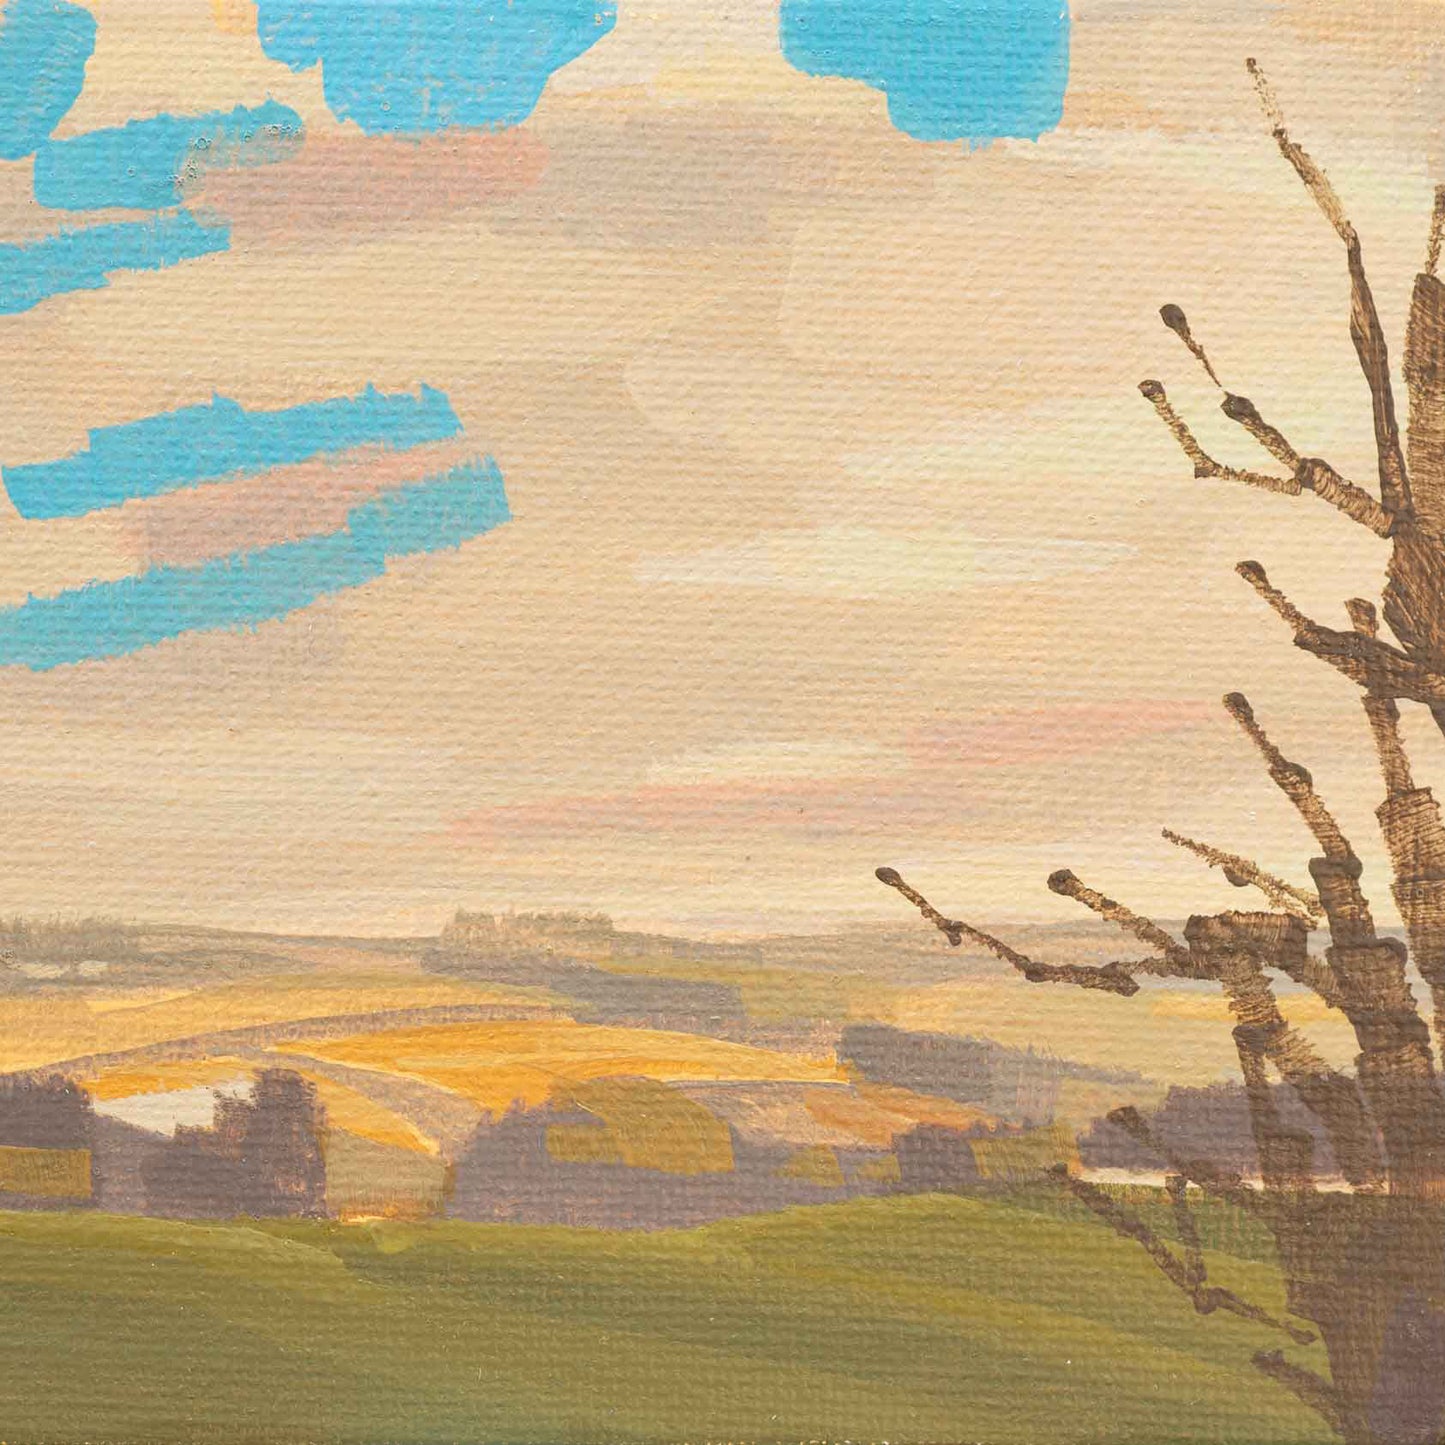 Original painting - "Evening Sun" - hand painted - acrylic painting - 10x15 cm - landscape picture - unique piece - with frame